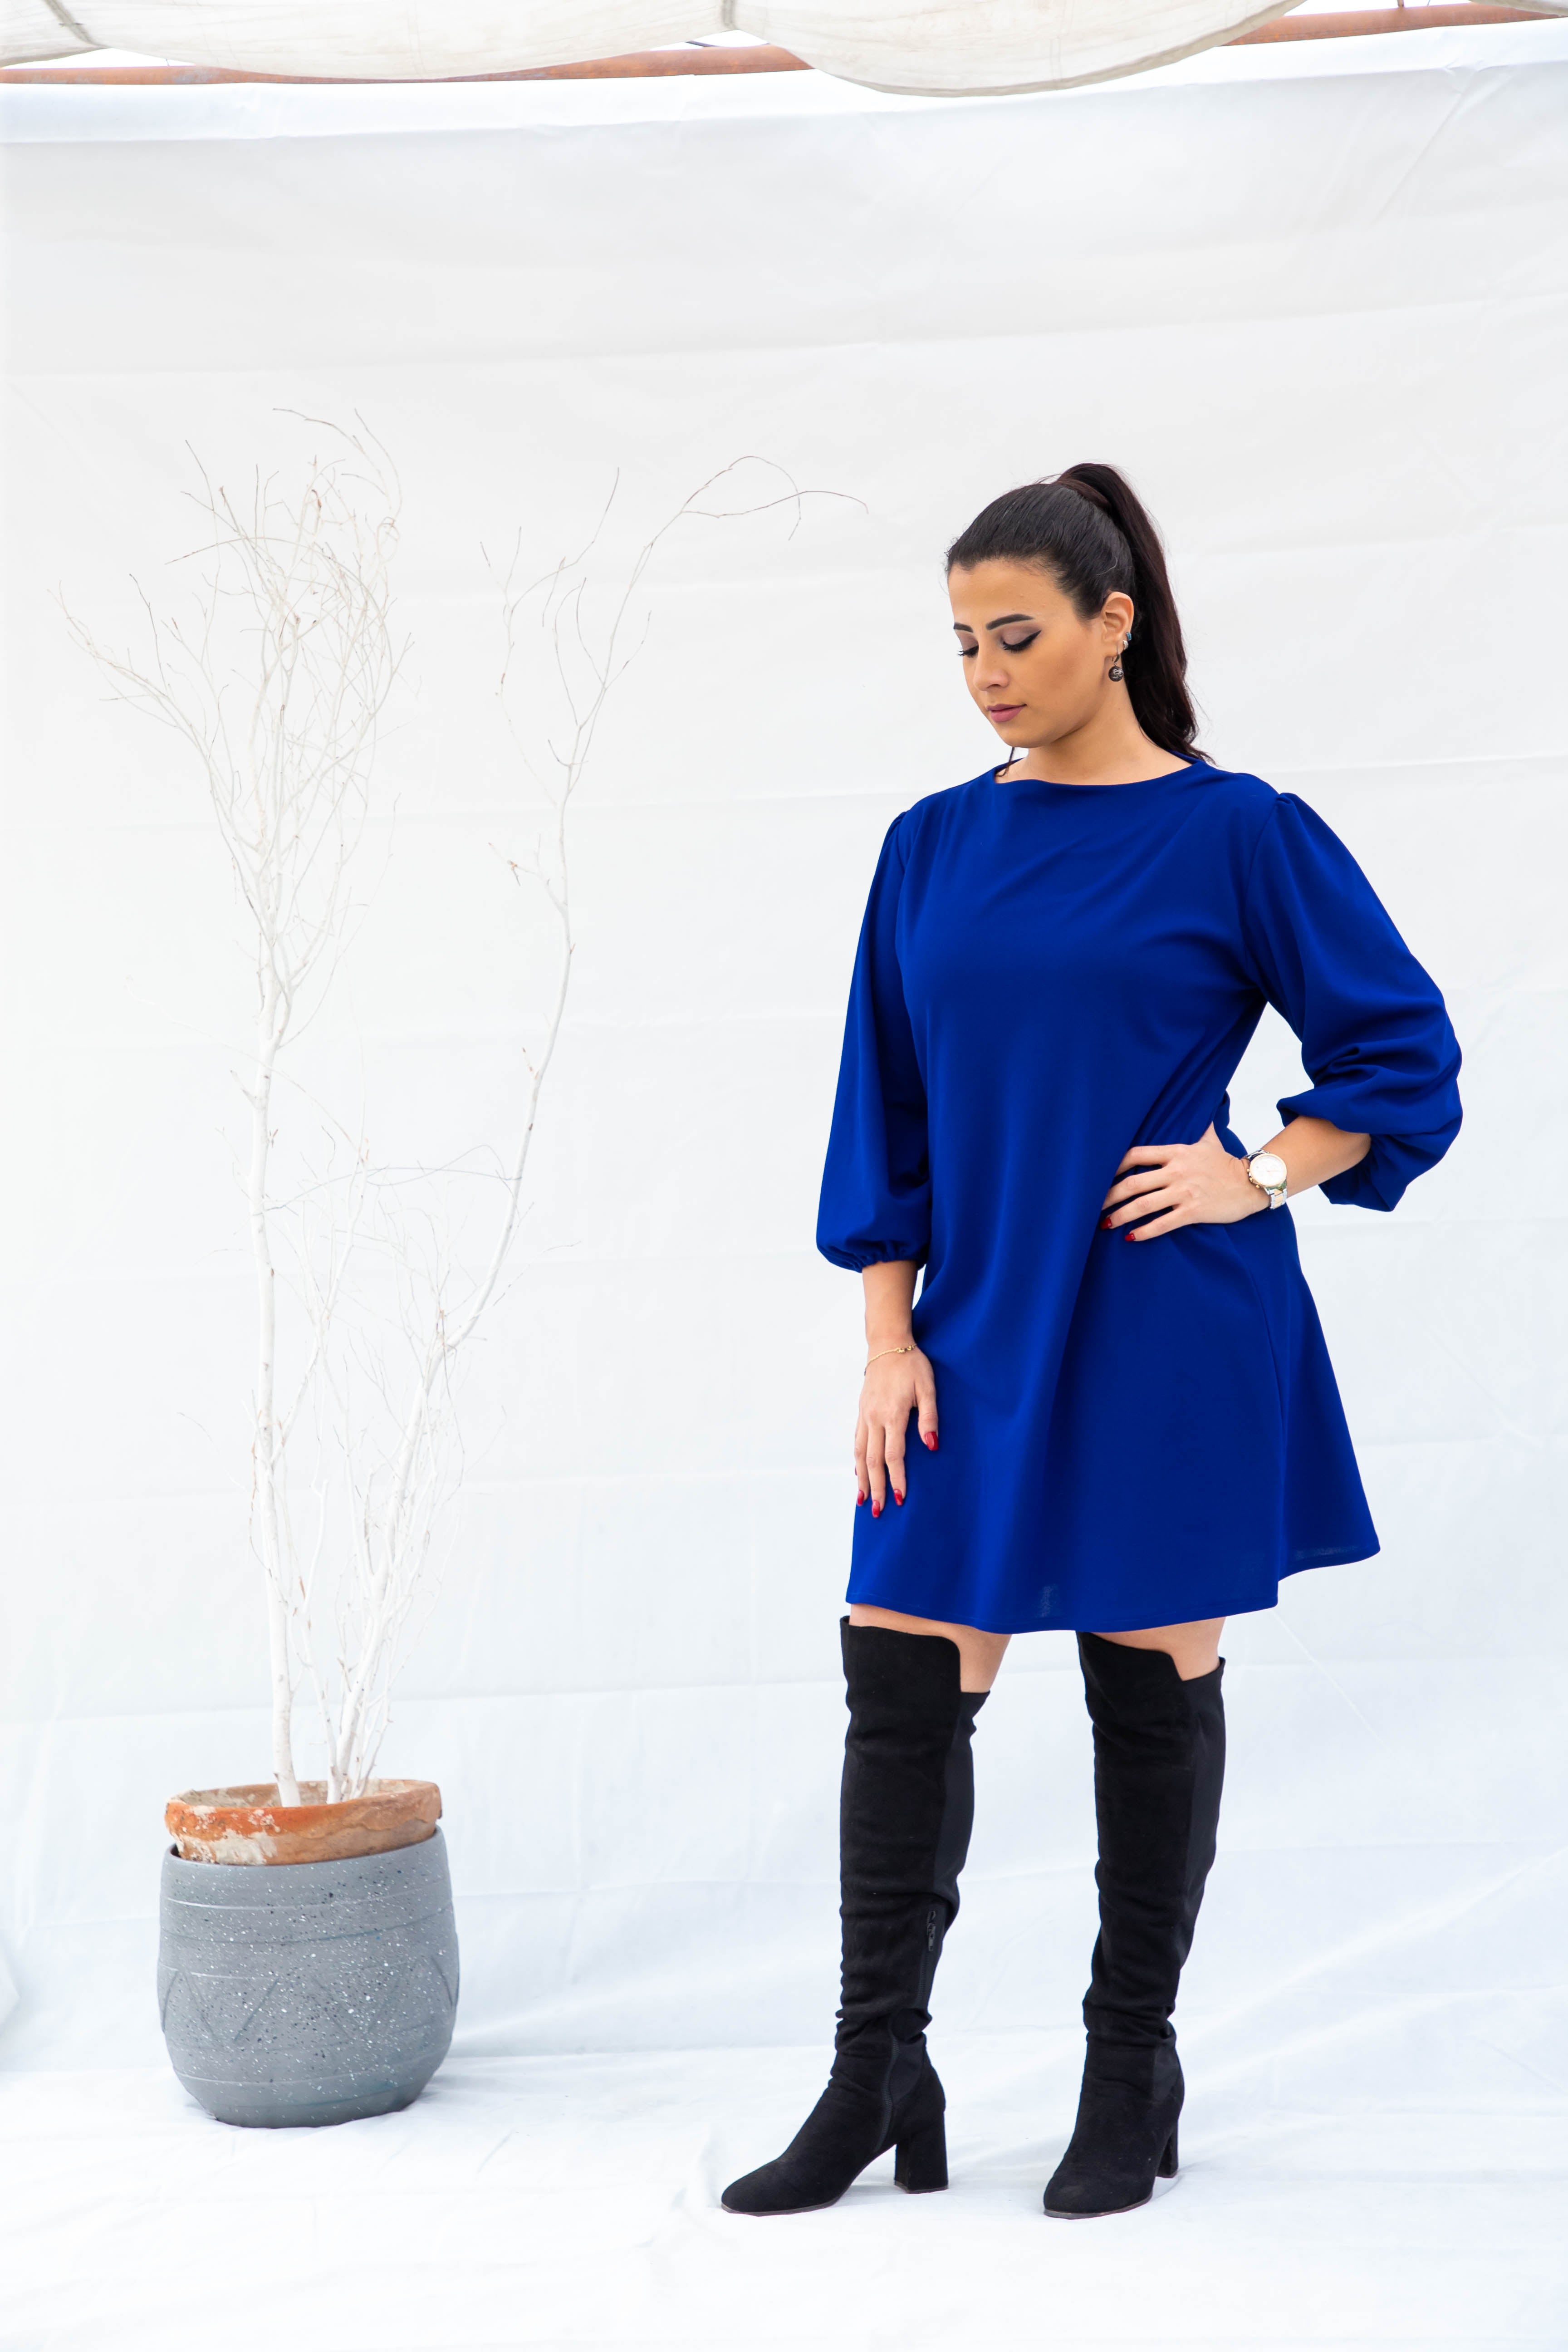 The Basic Puffy Sleeve Dress - Blue